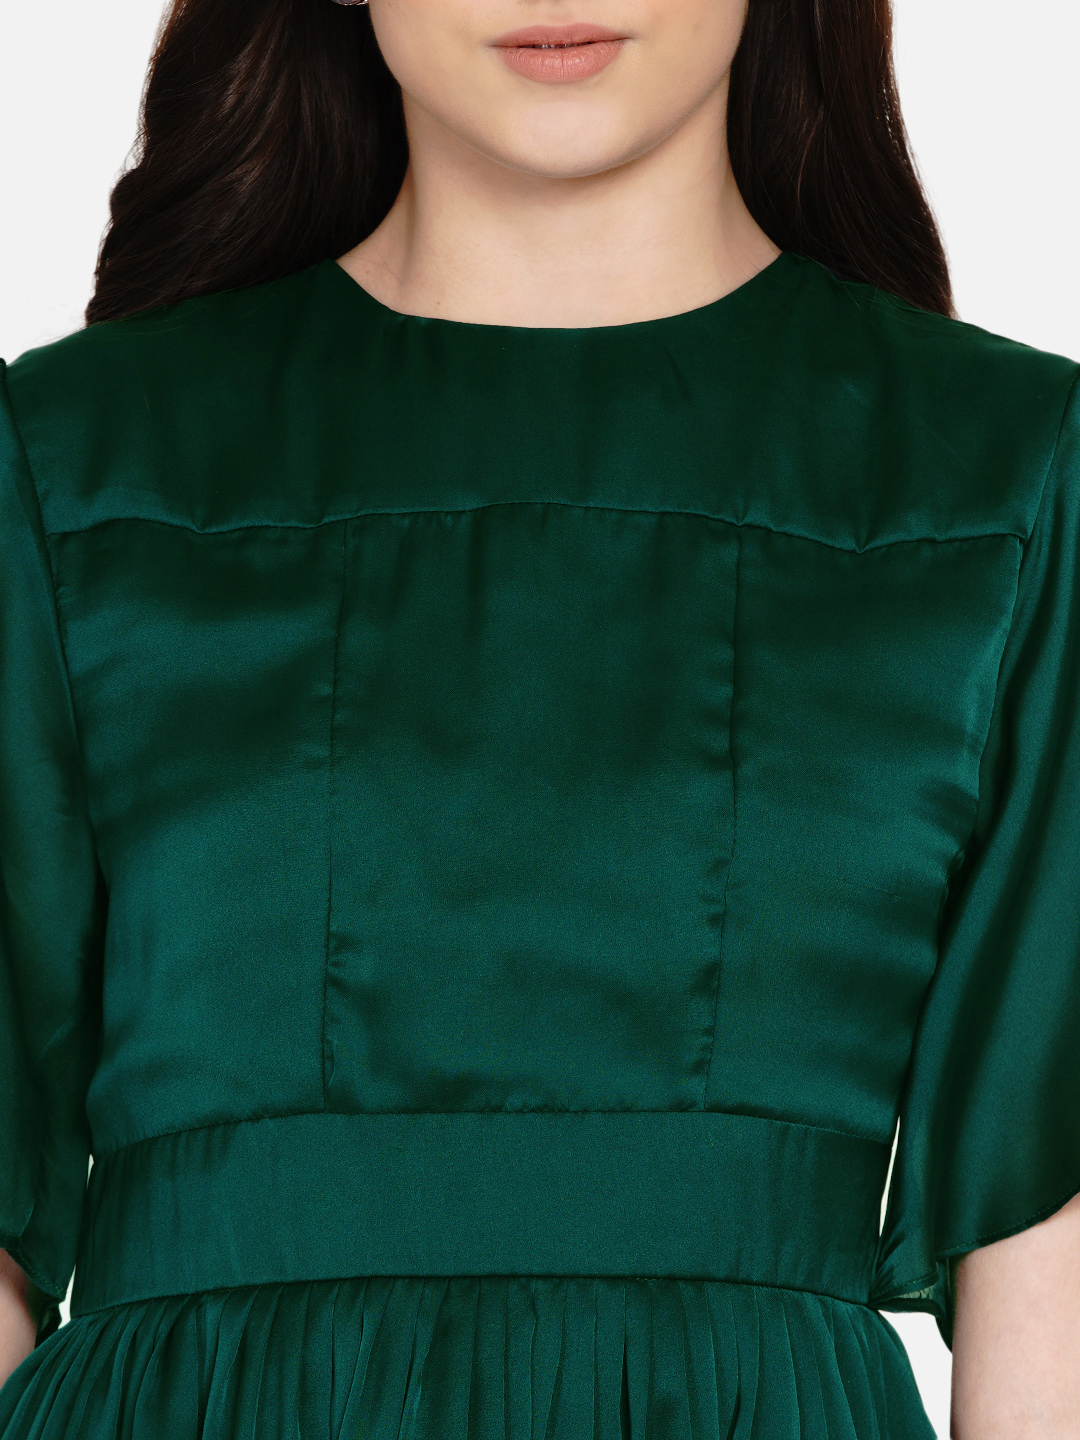 Majestic Emerald dress -4